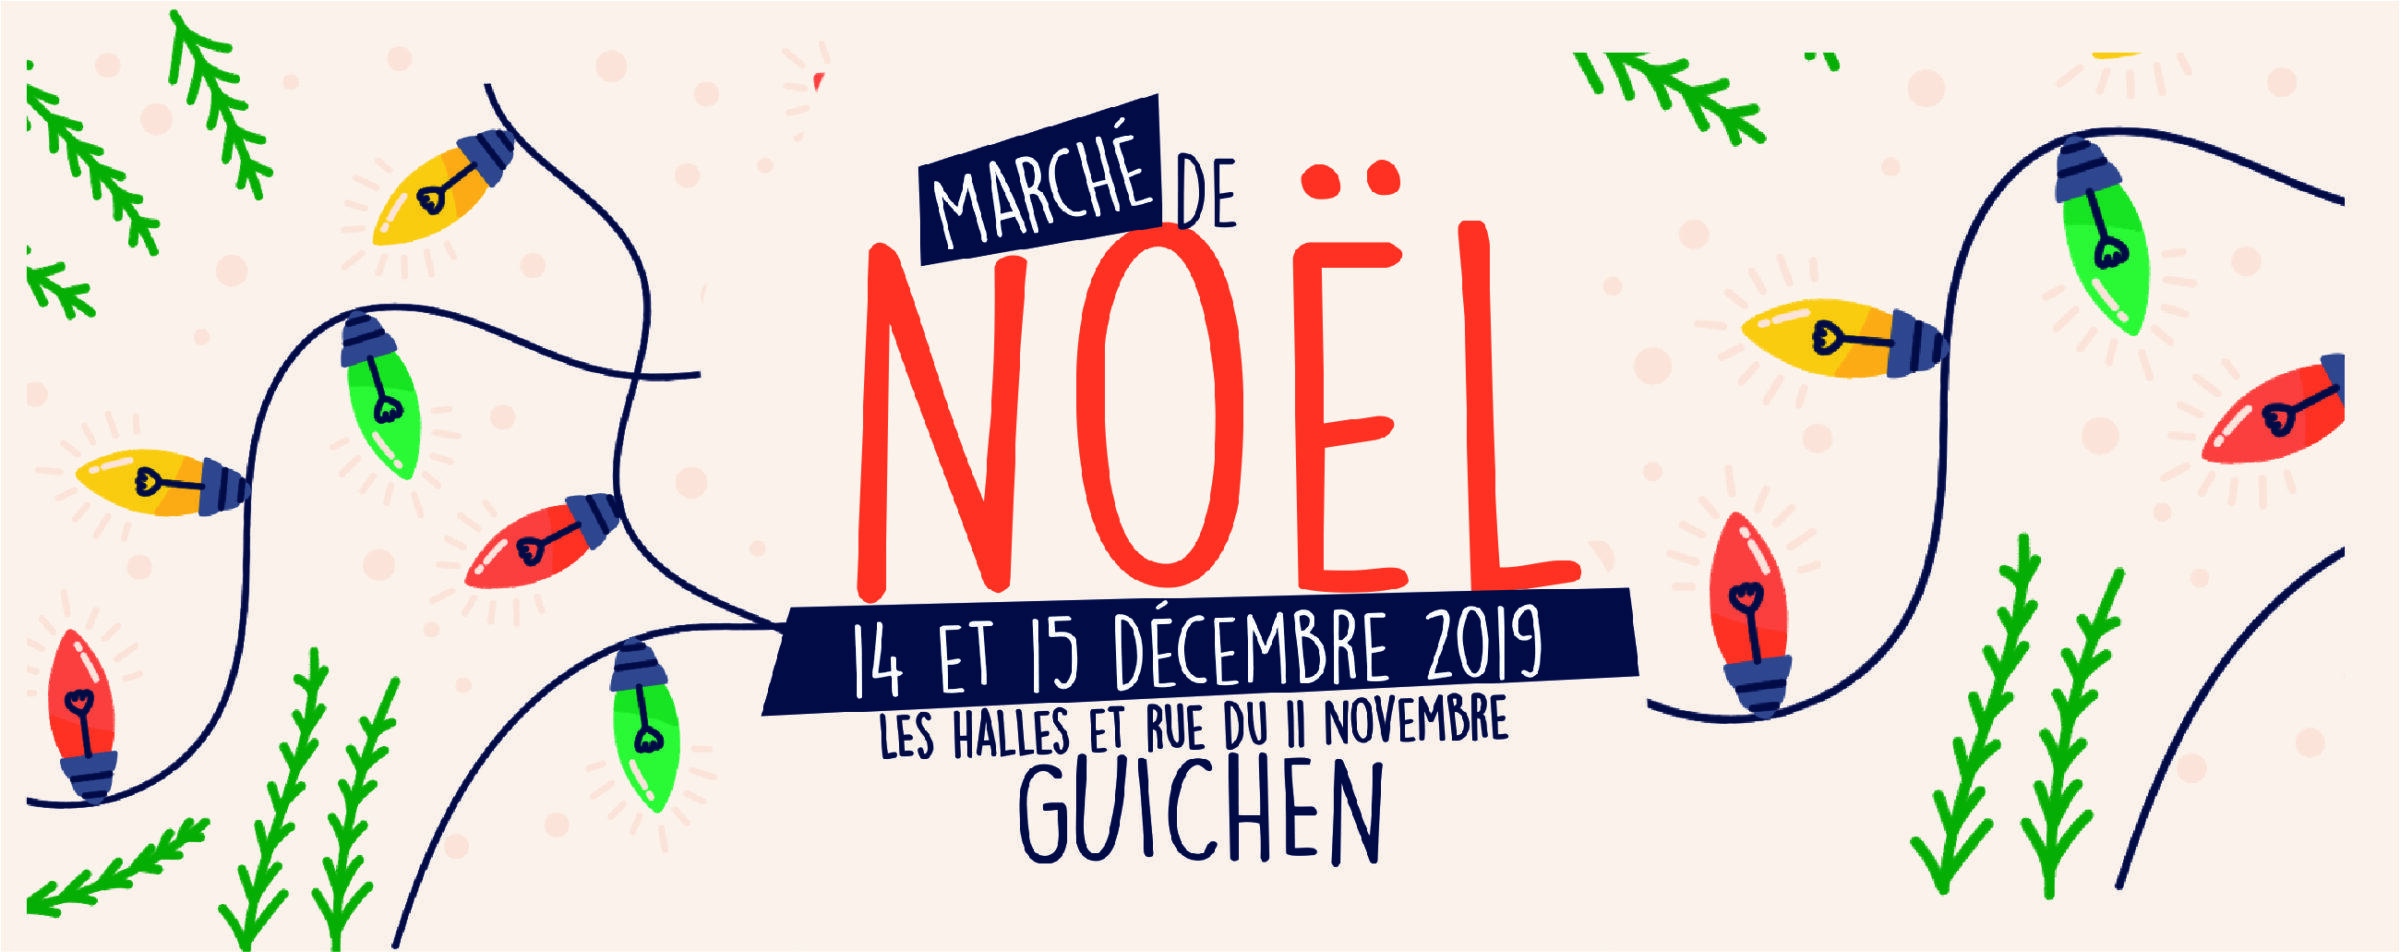 marche-noel-couv-2019